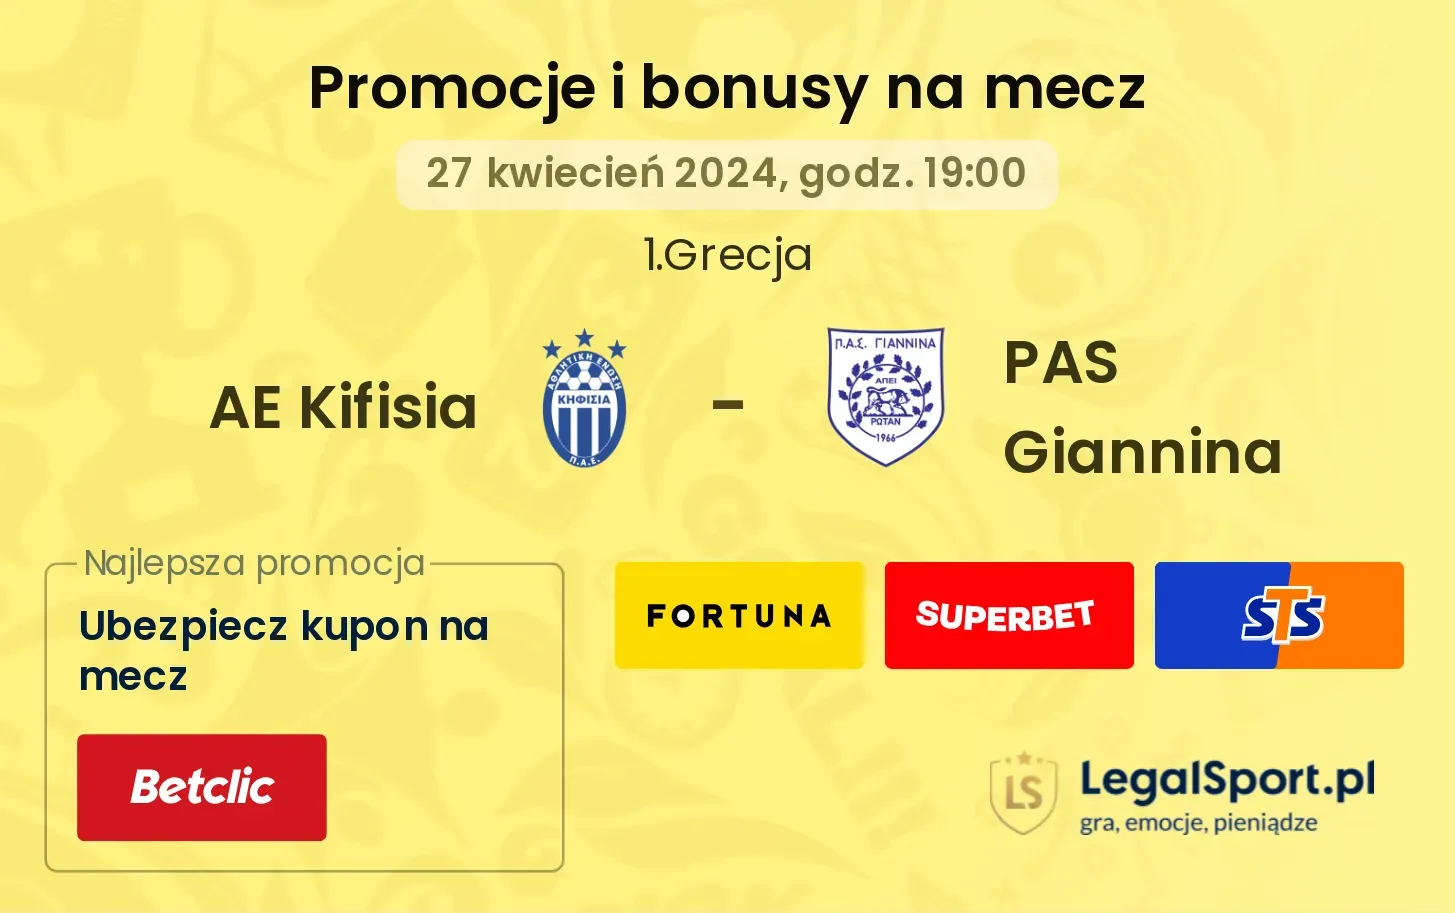 AE Kifisia - PAS Giannina promocje bonusy na mecz